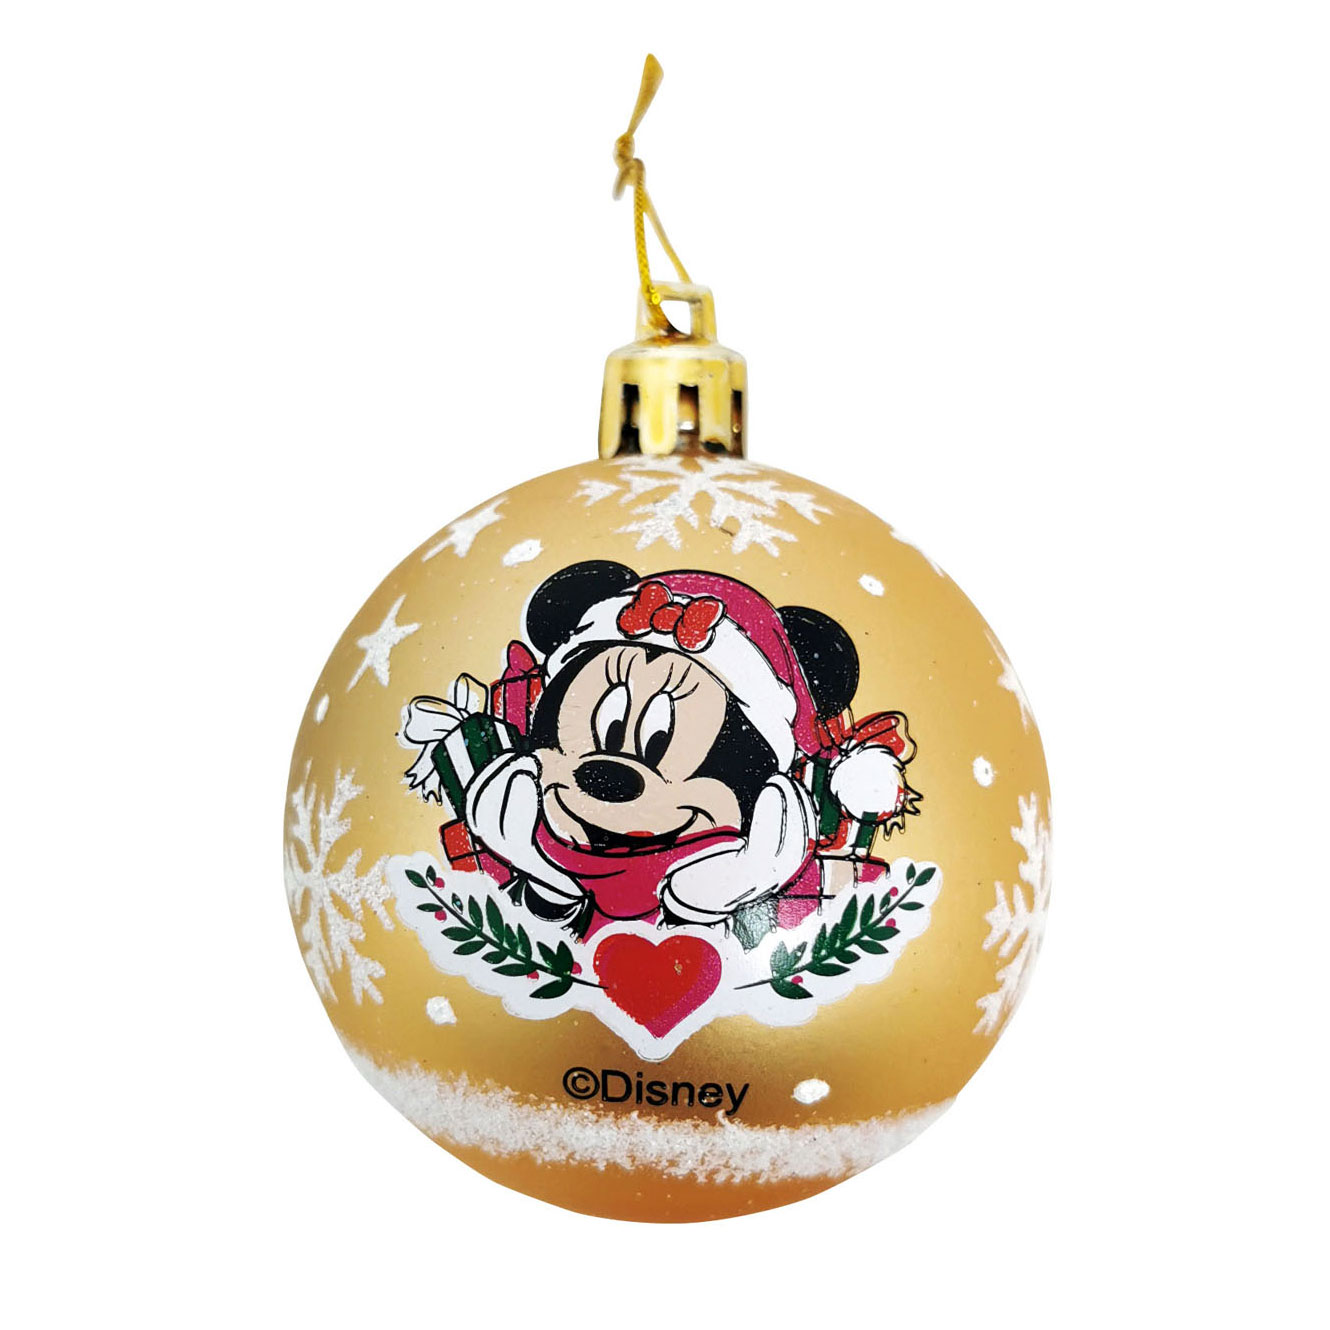 Kinder-Weihnachtskugeln Minnie Mouse Gold, 6 Stück.